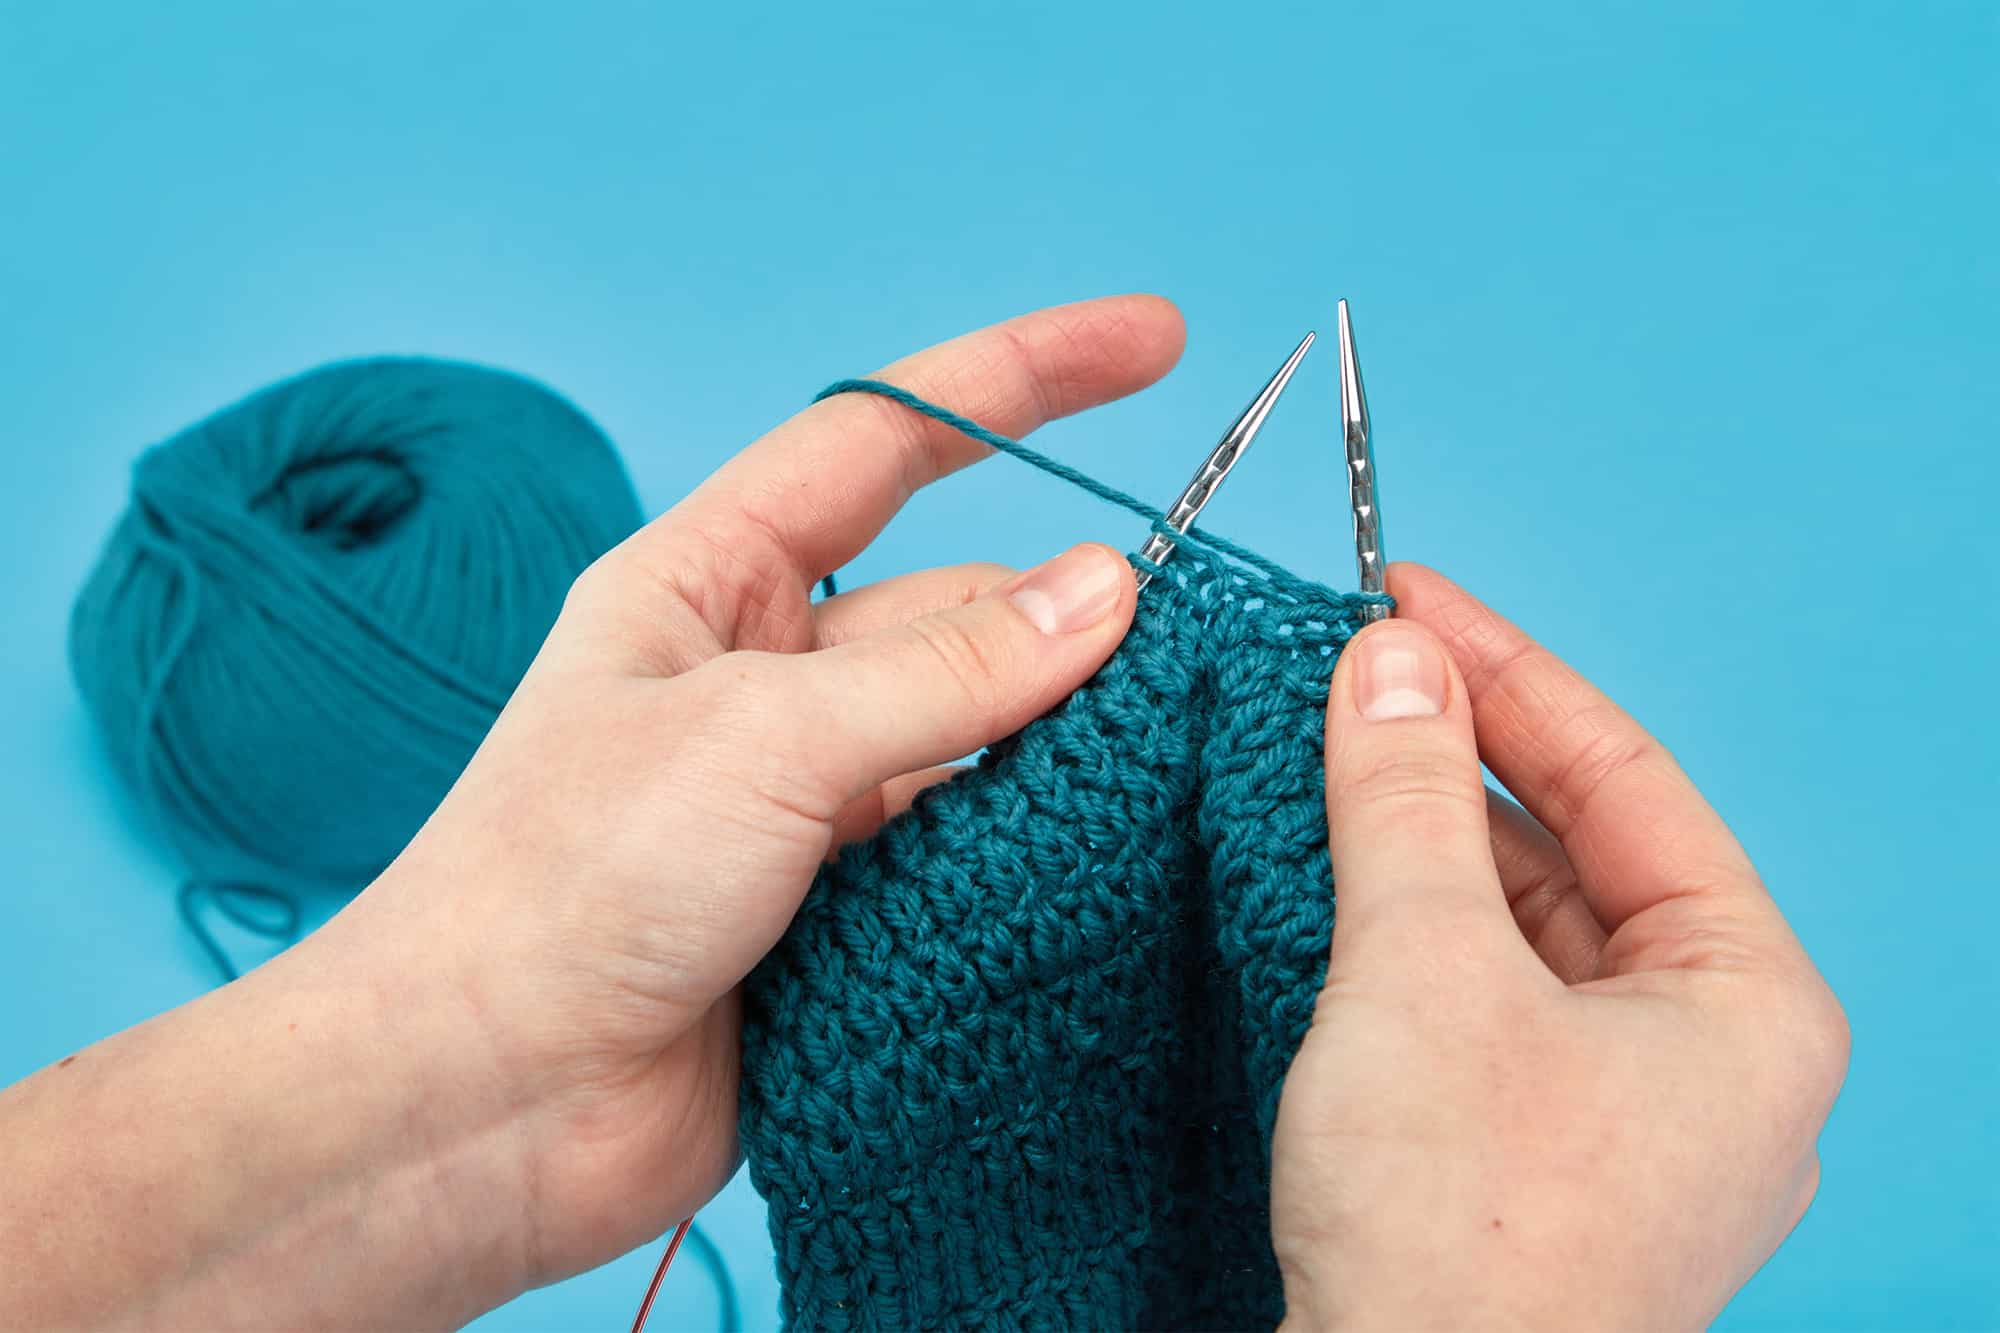 Addi CraSyTrio Novel Knitting Needles / LONG – La Bien Aimee